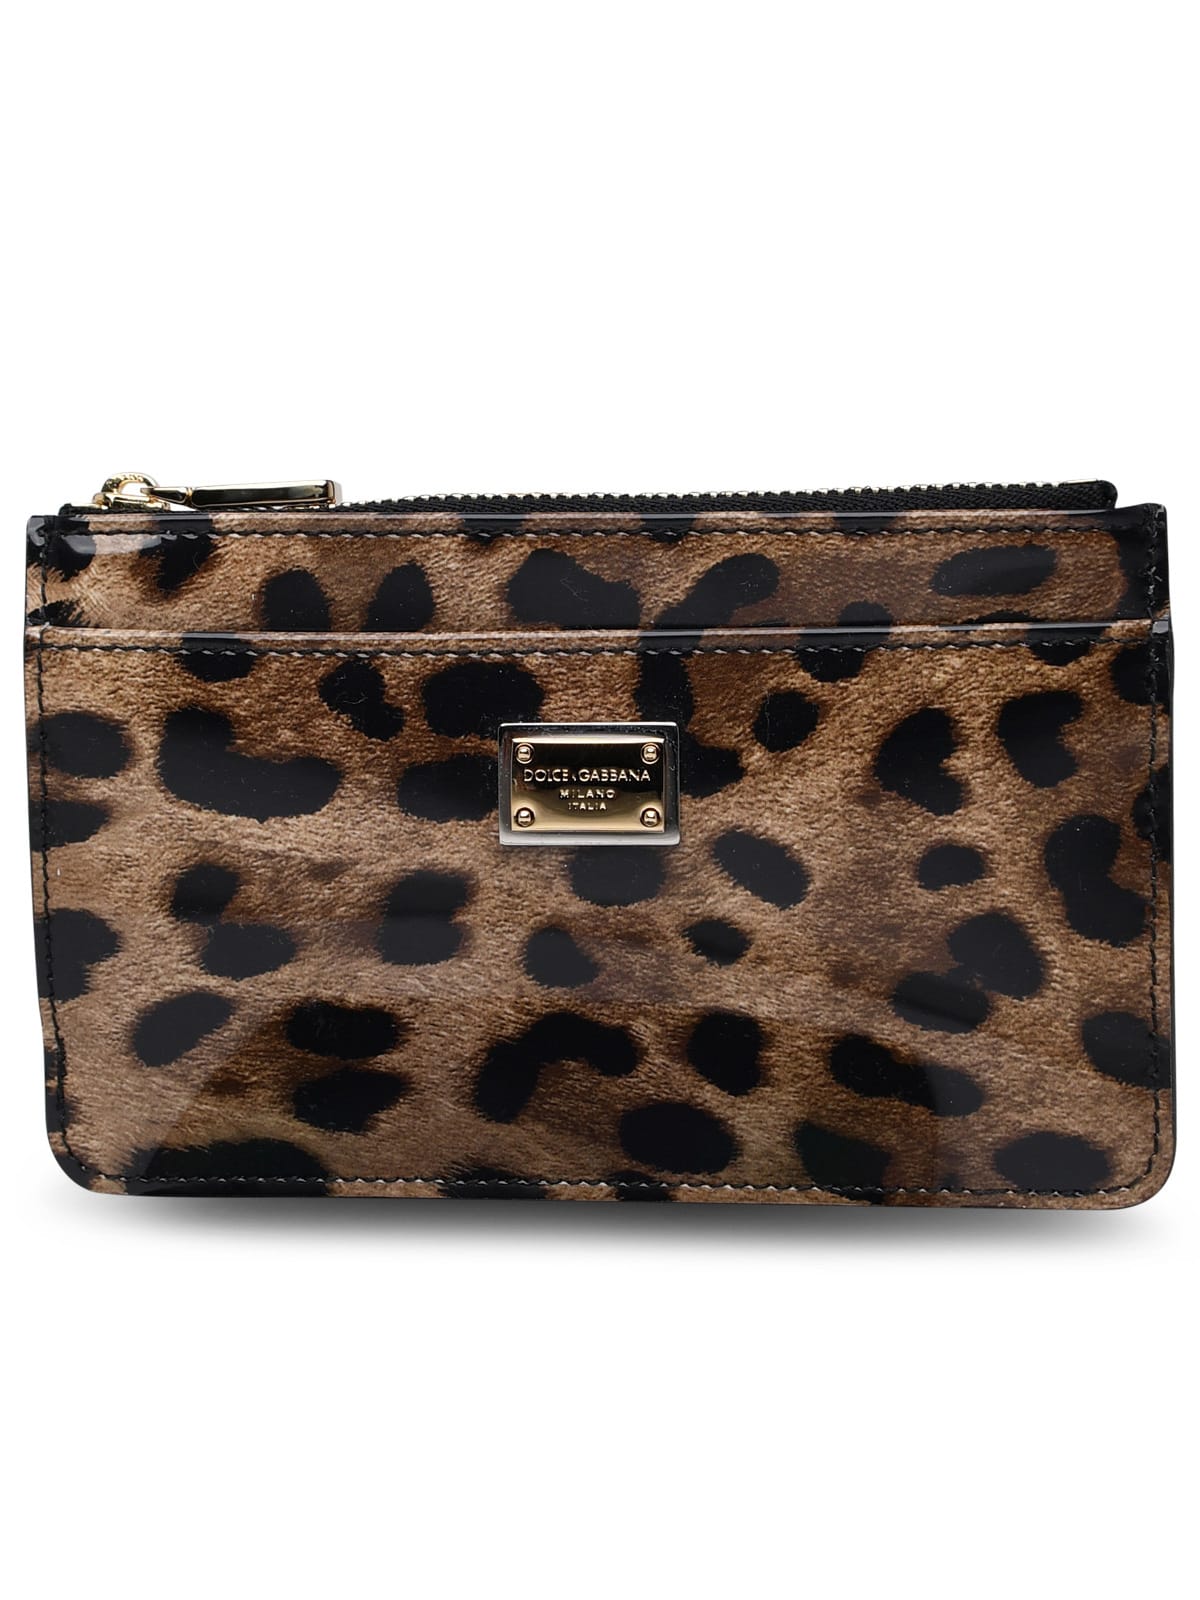 Dolce&Gabbana Medium Sicily bag in shiny leopard-print leather